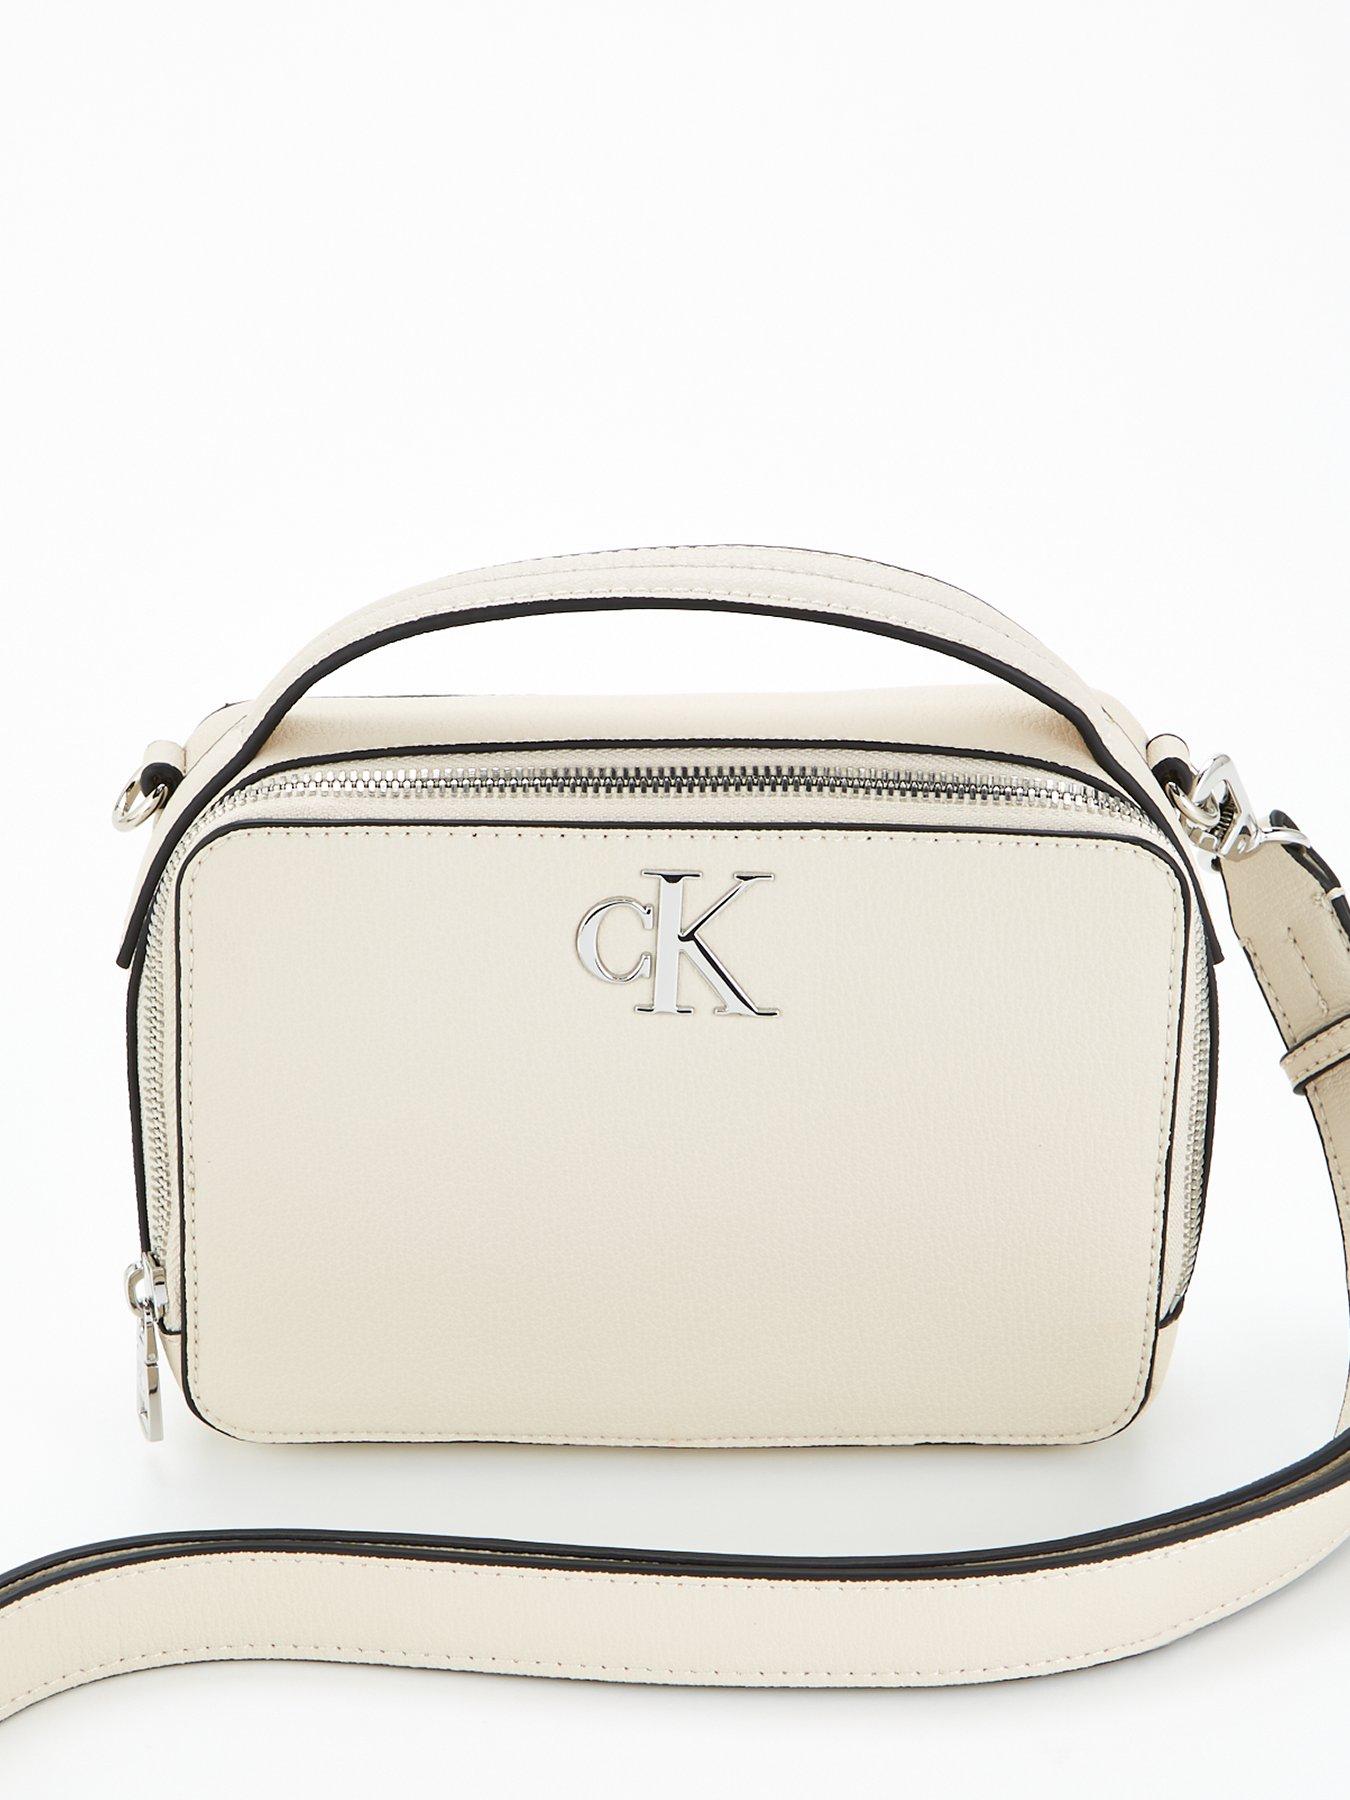 CALVIN KLEIN Womens CK Monogram Signature Bag Purse Off White Gold Logo  H8AHJ7LW | eBay